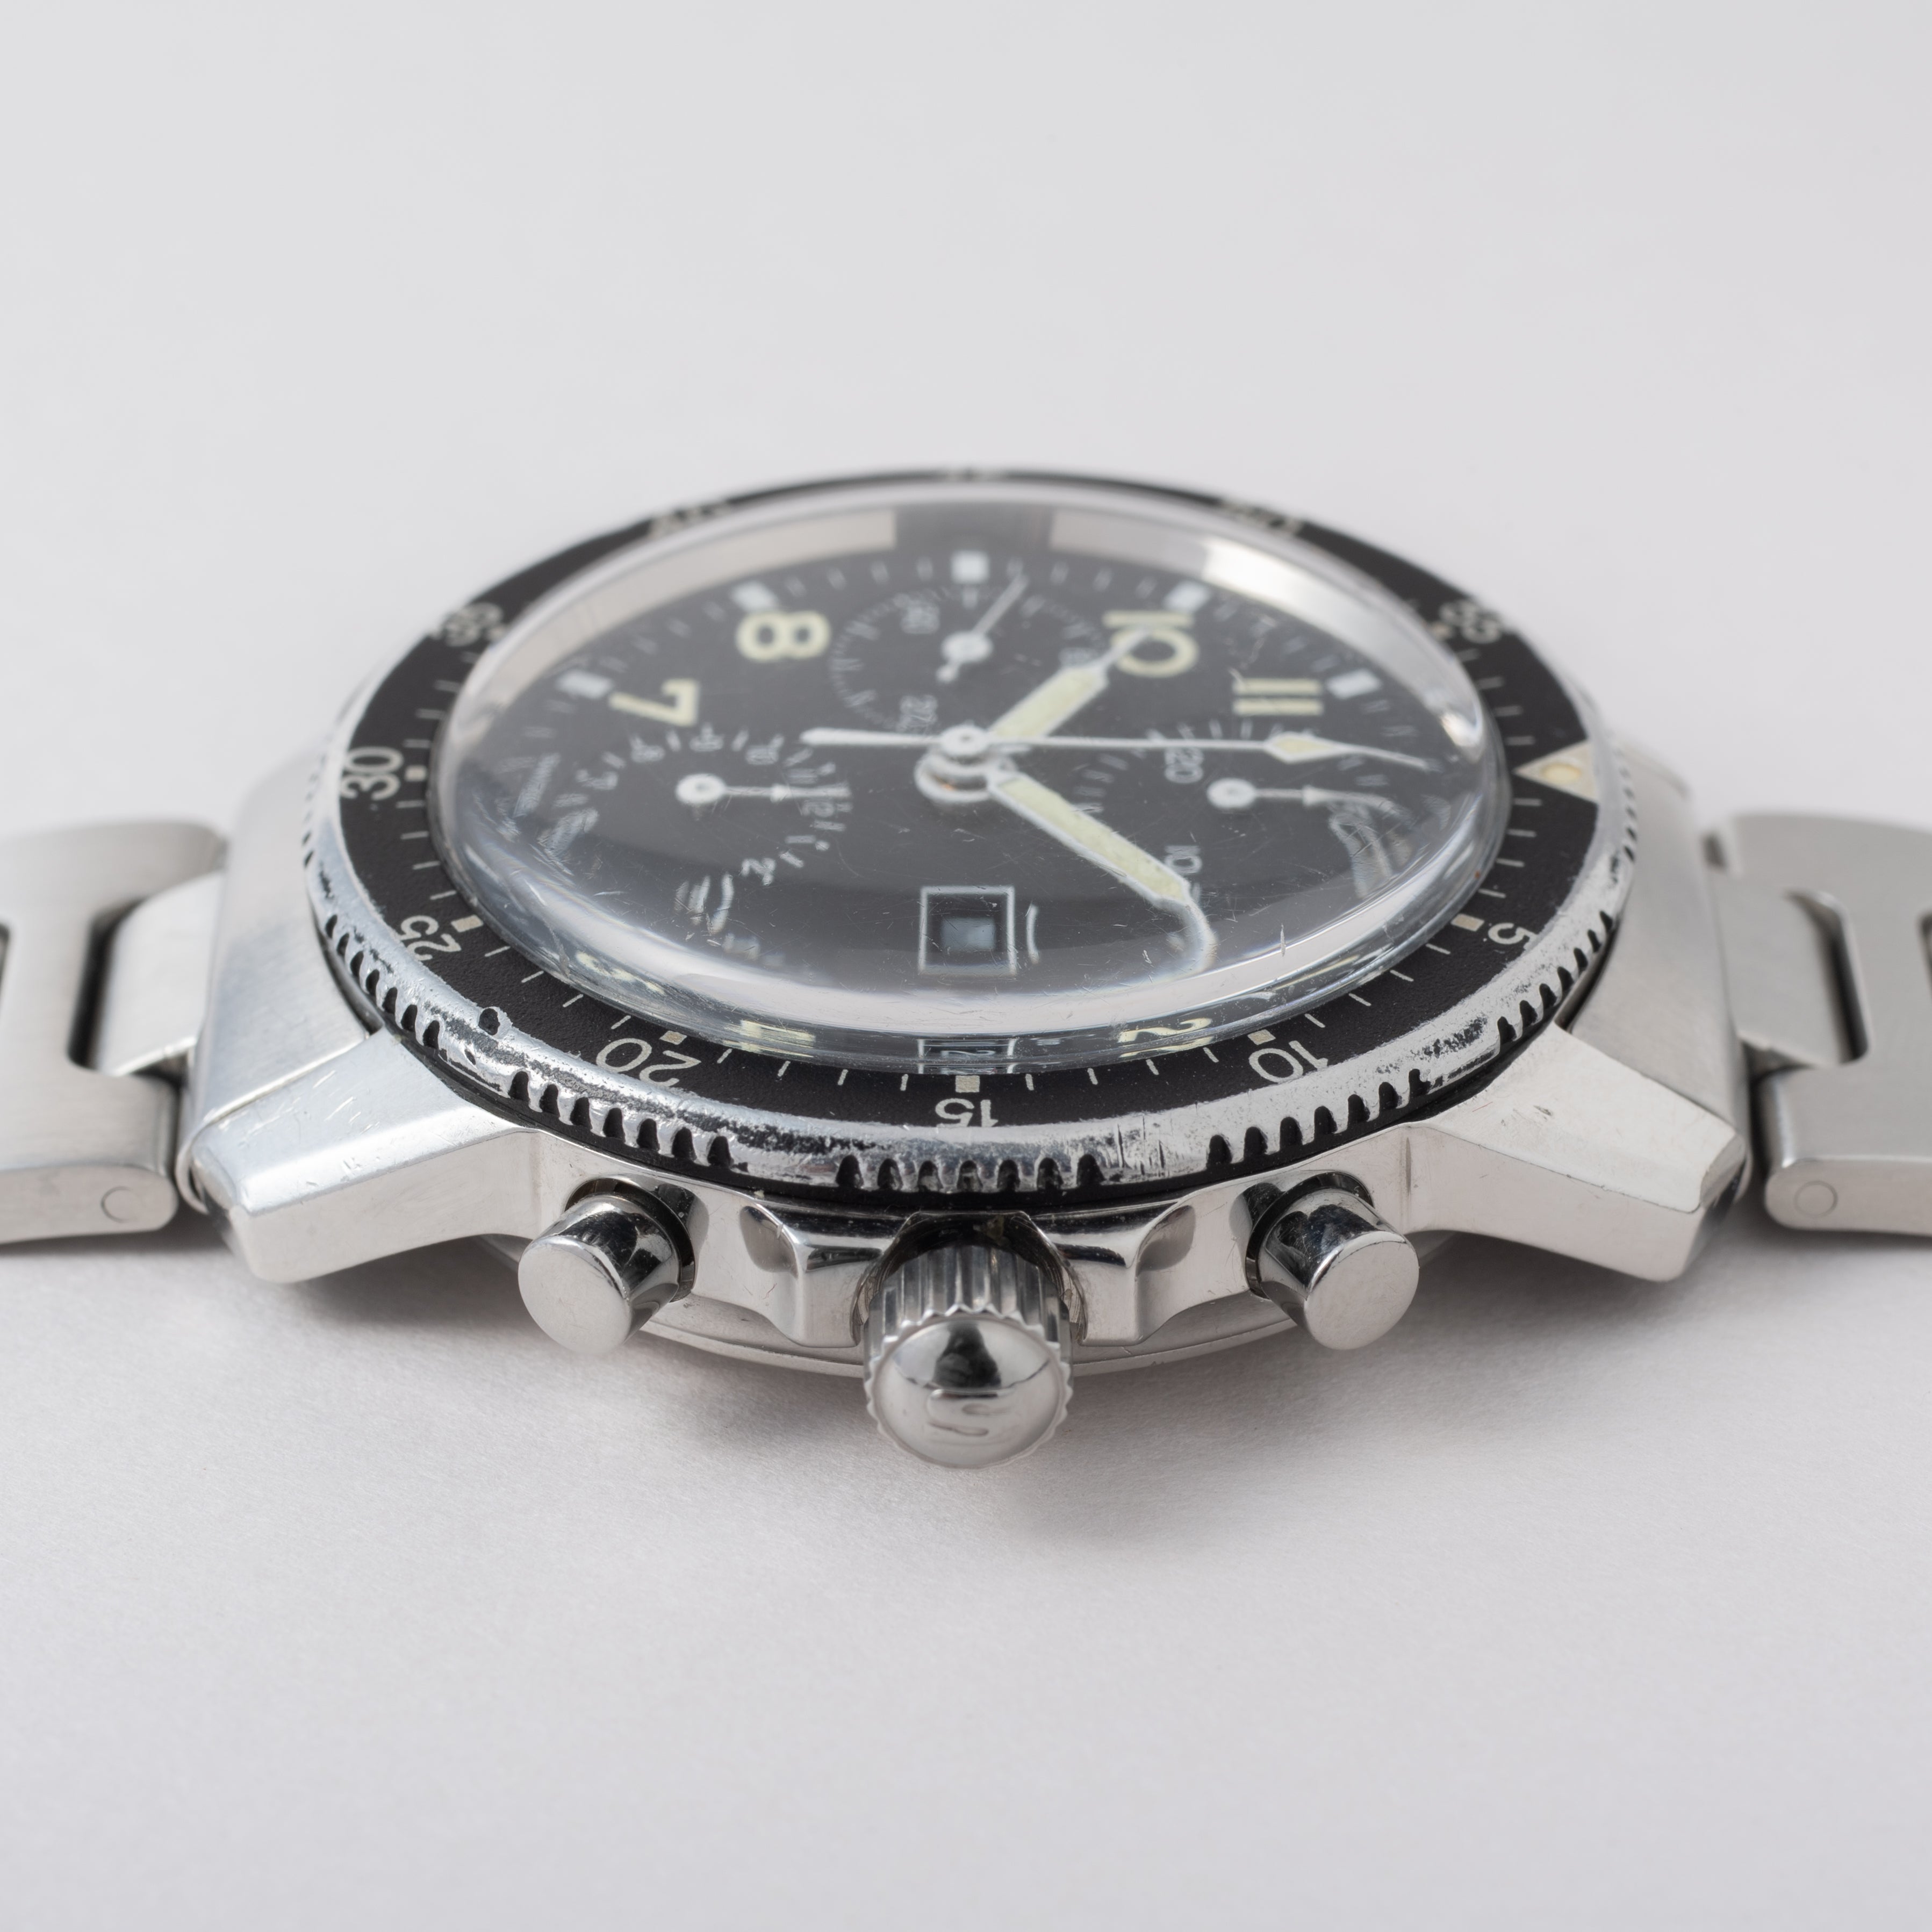 Sinn model 103 クロノグラフ 手巻き式 - 腕時計(アナログ)